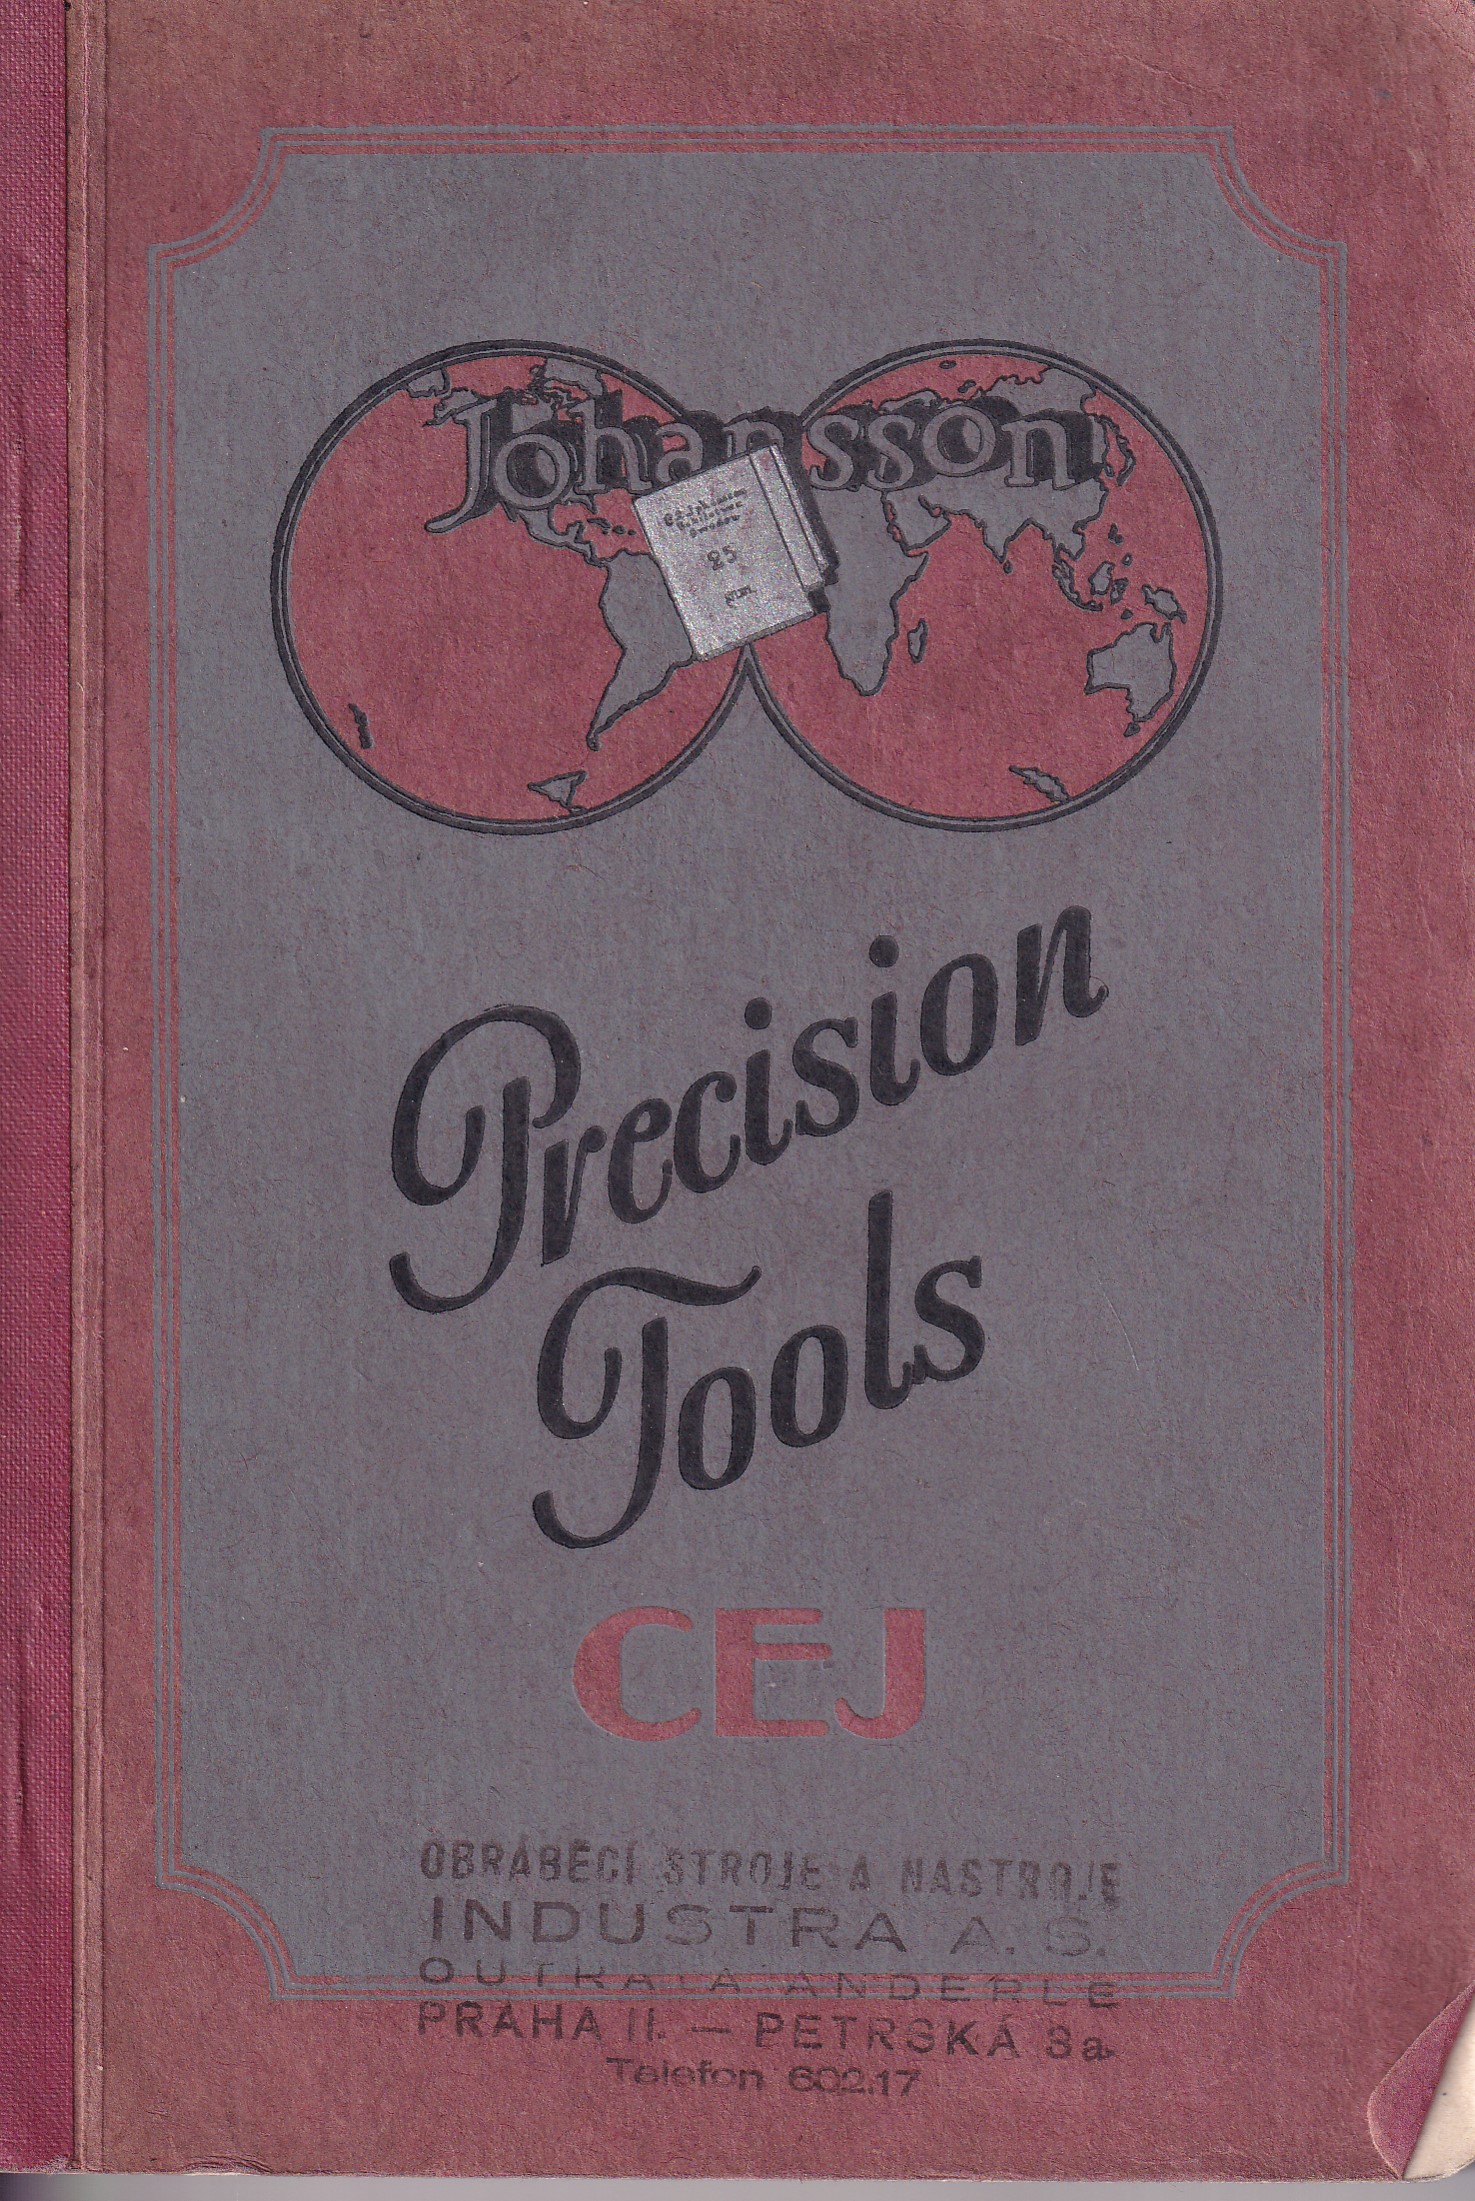 JOHANSSON Gauges and Precision Tools - katalog